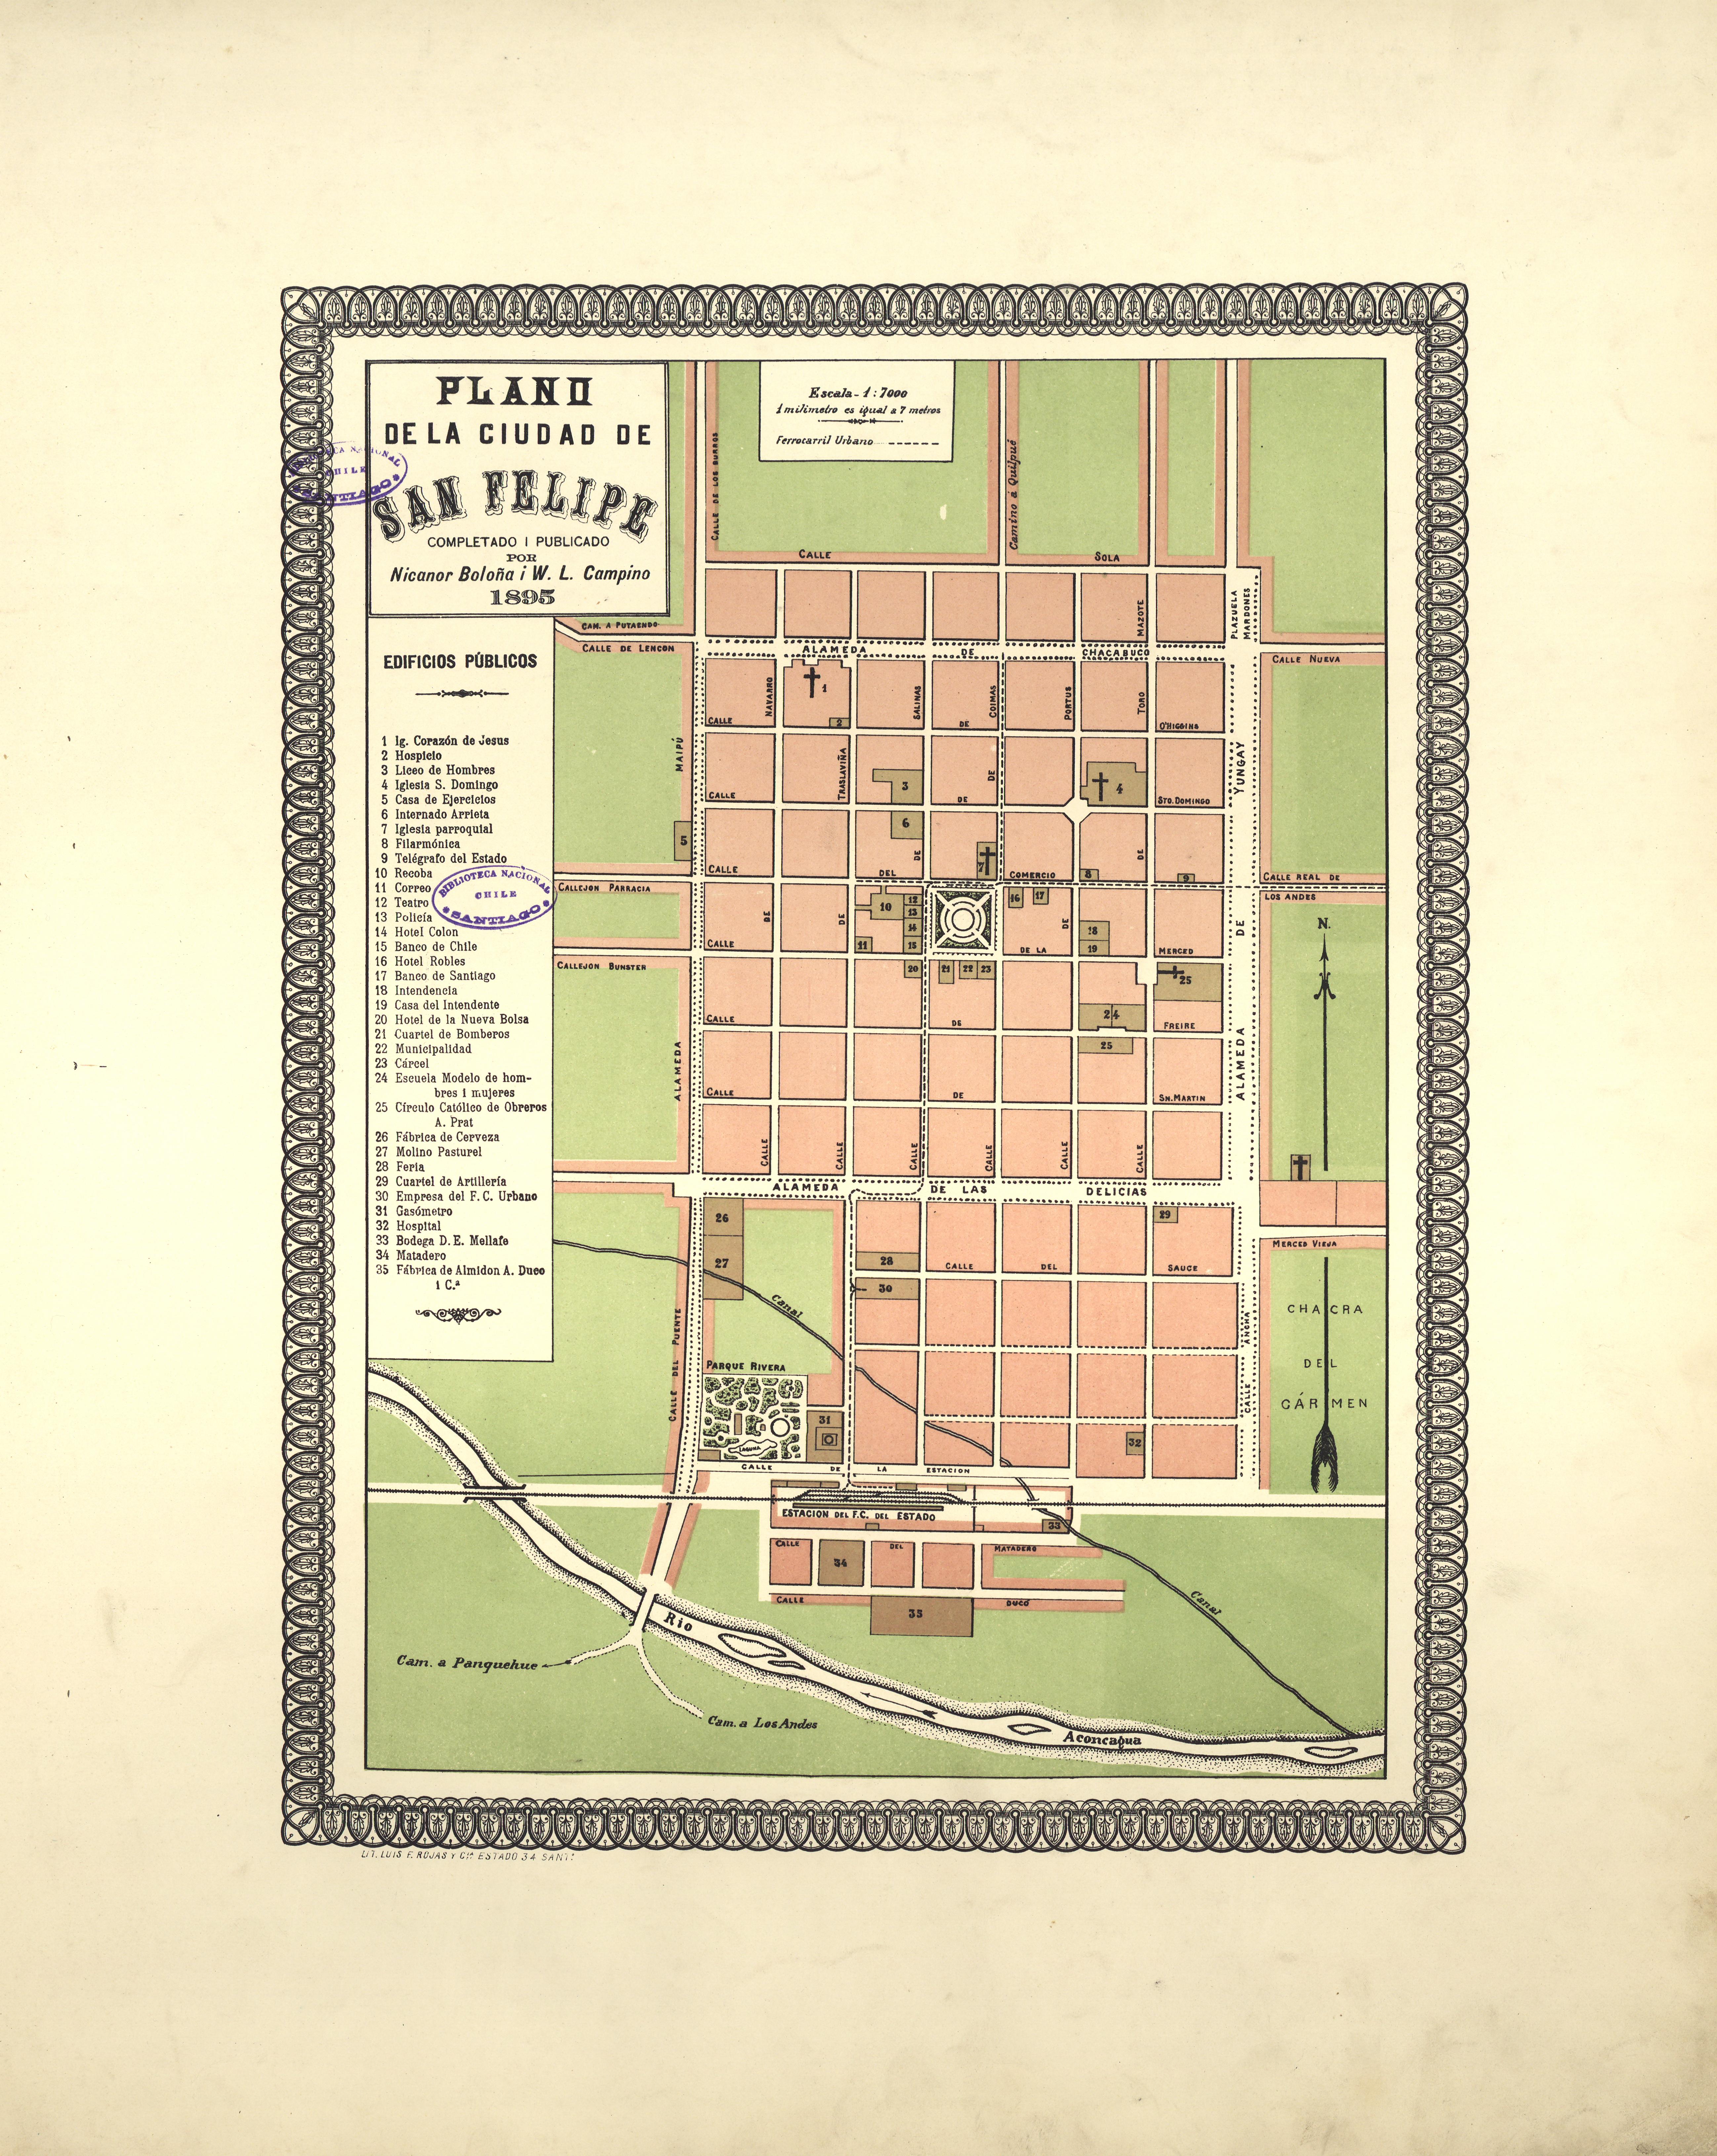 Plano de la ciudad de San Felipe, 1895